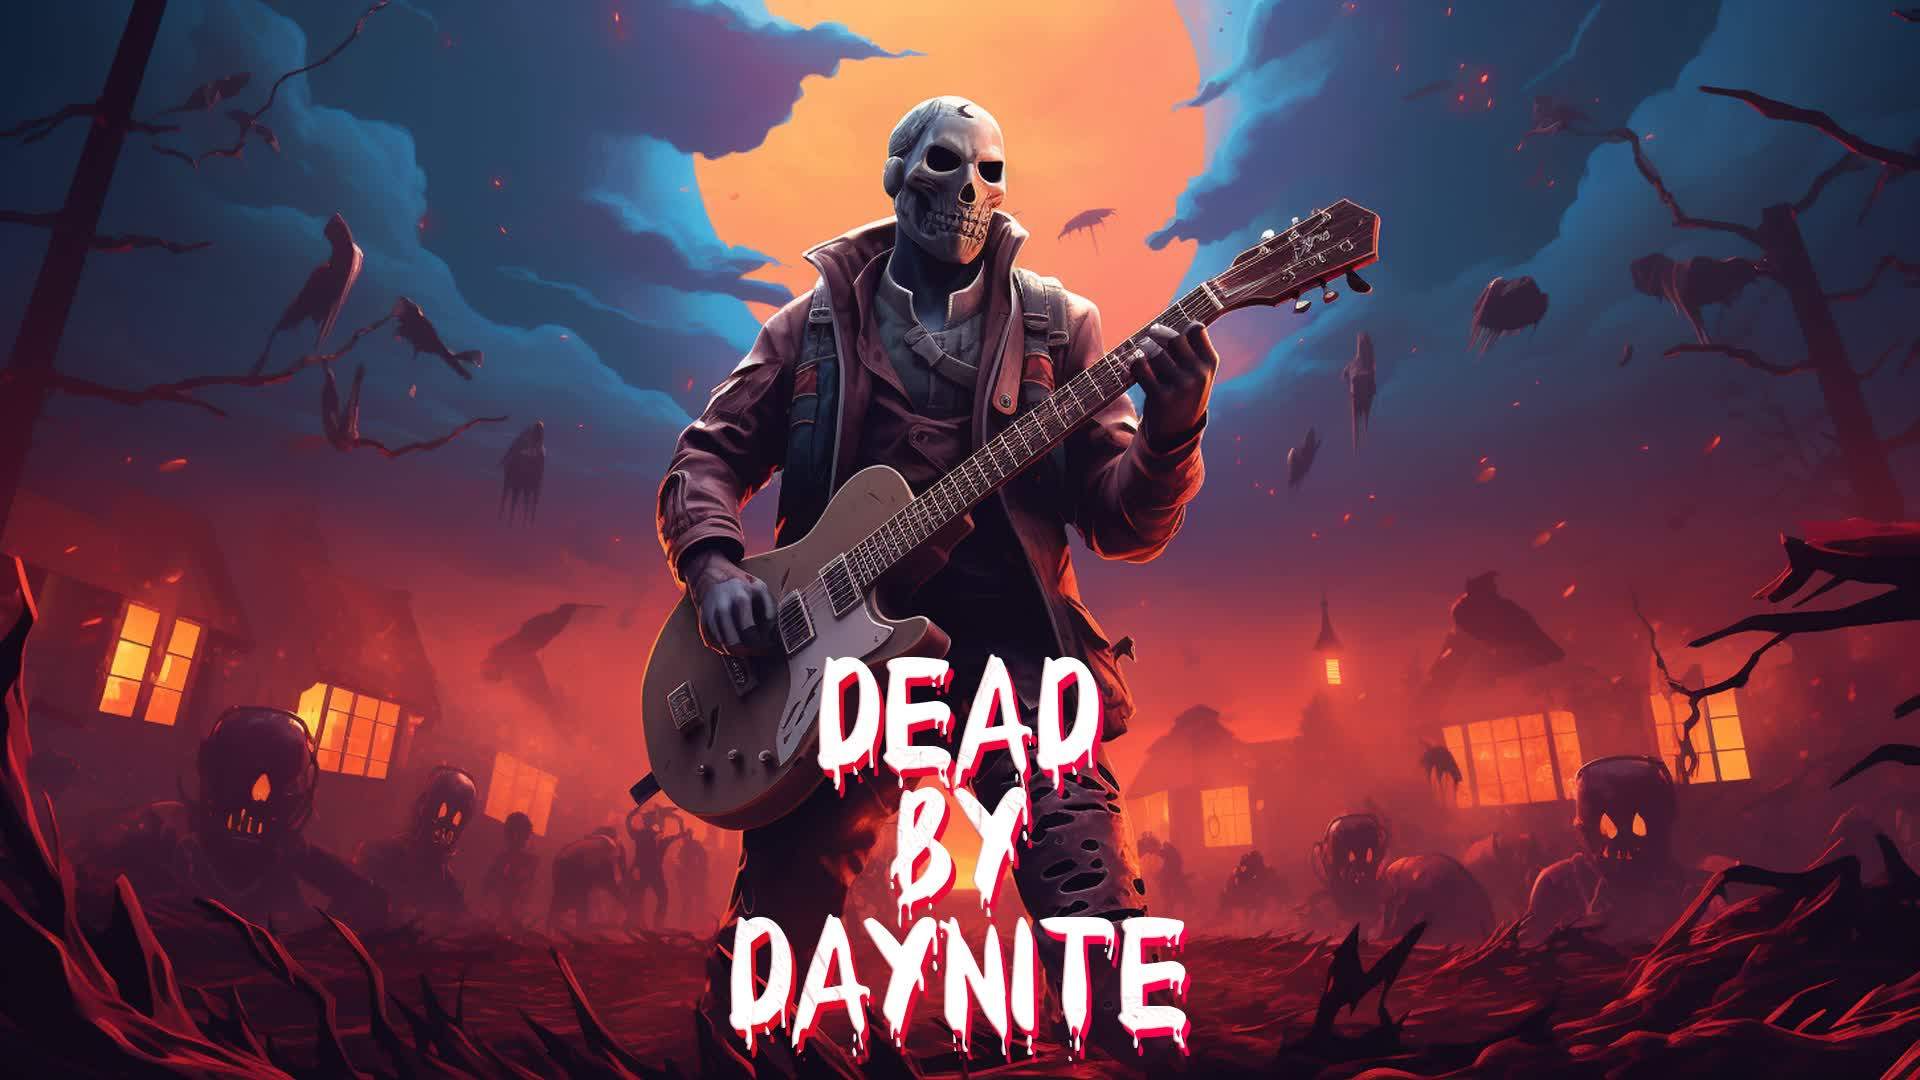 Dead By Daynite